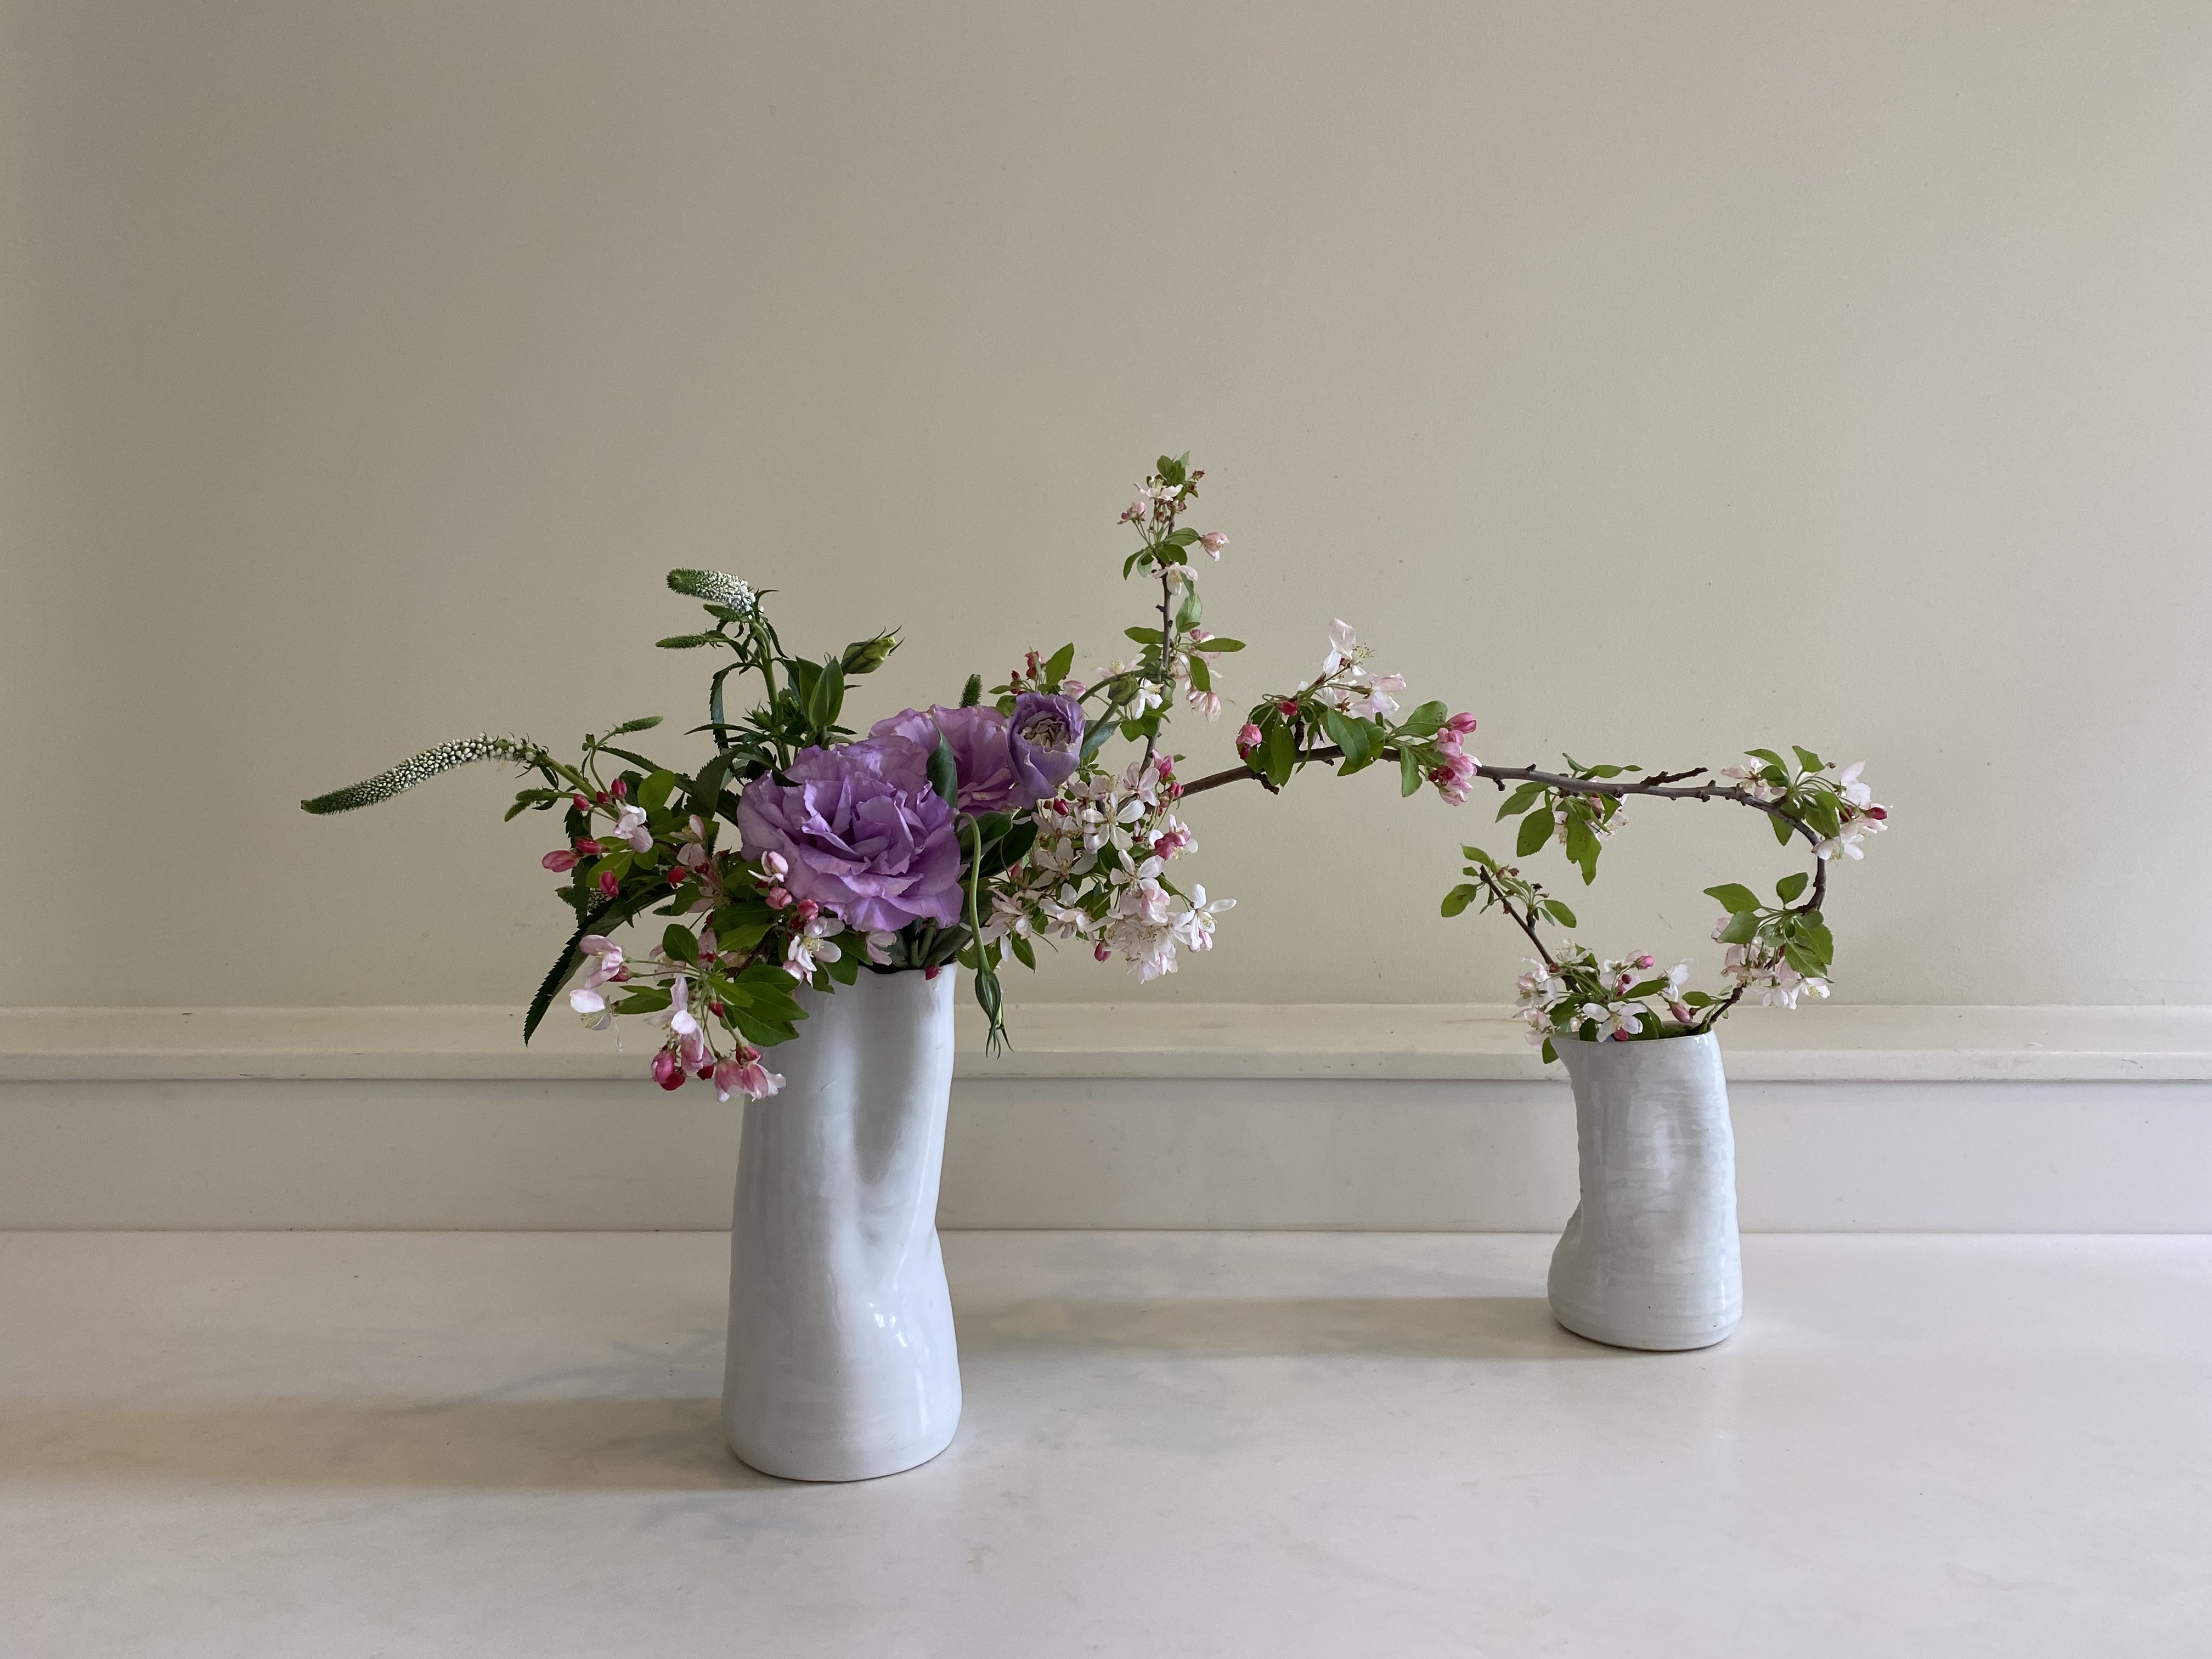 An ikebana arrangement made up of two vases